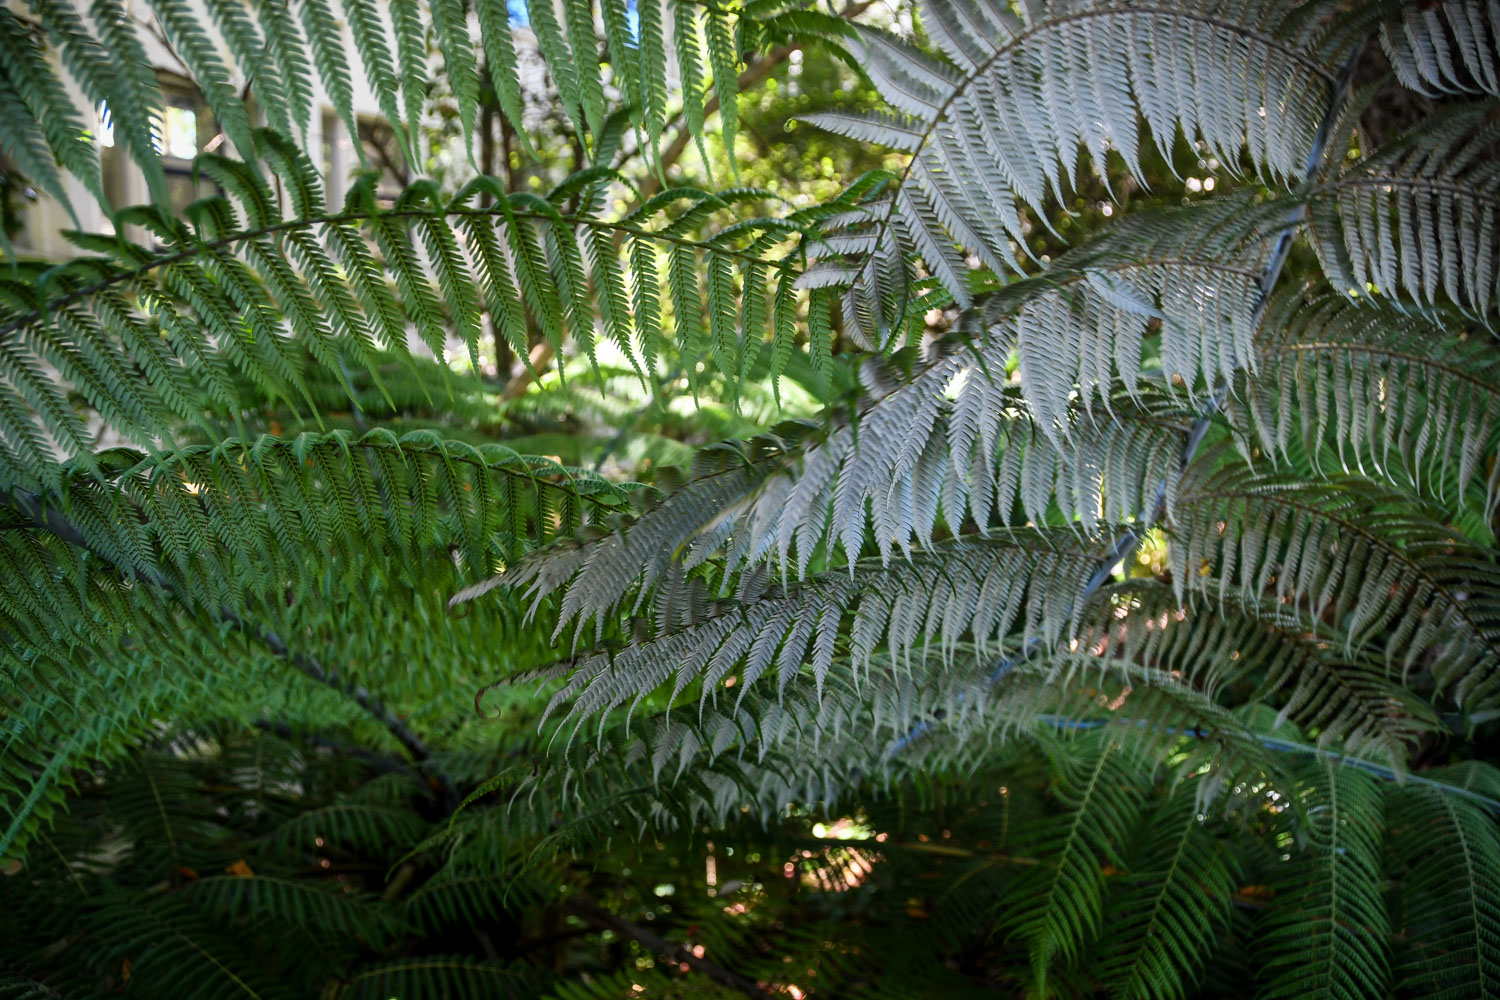 New Zealand Silver Ferns